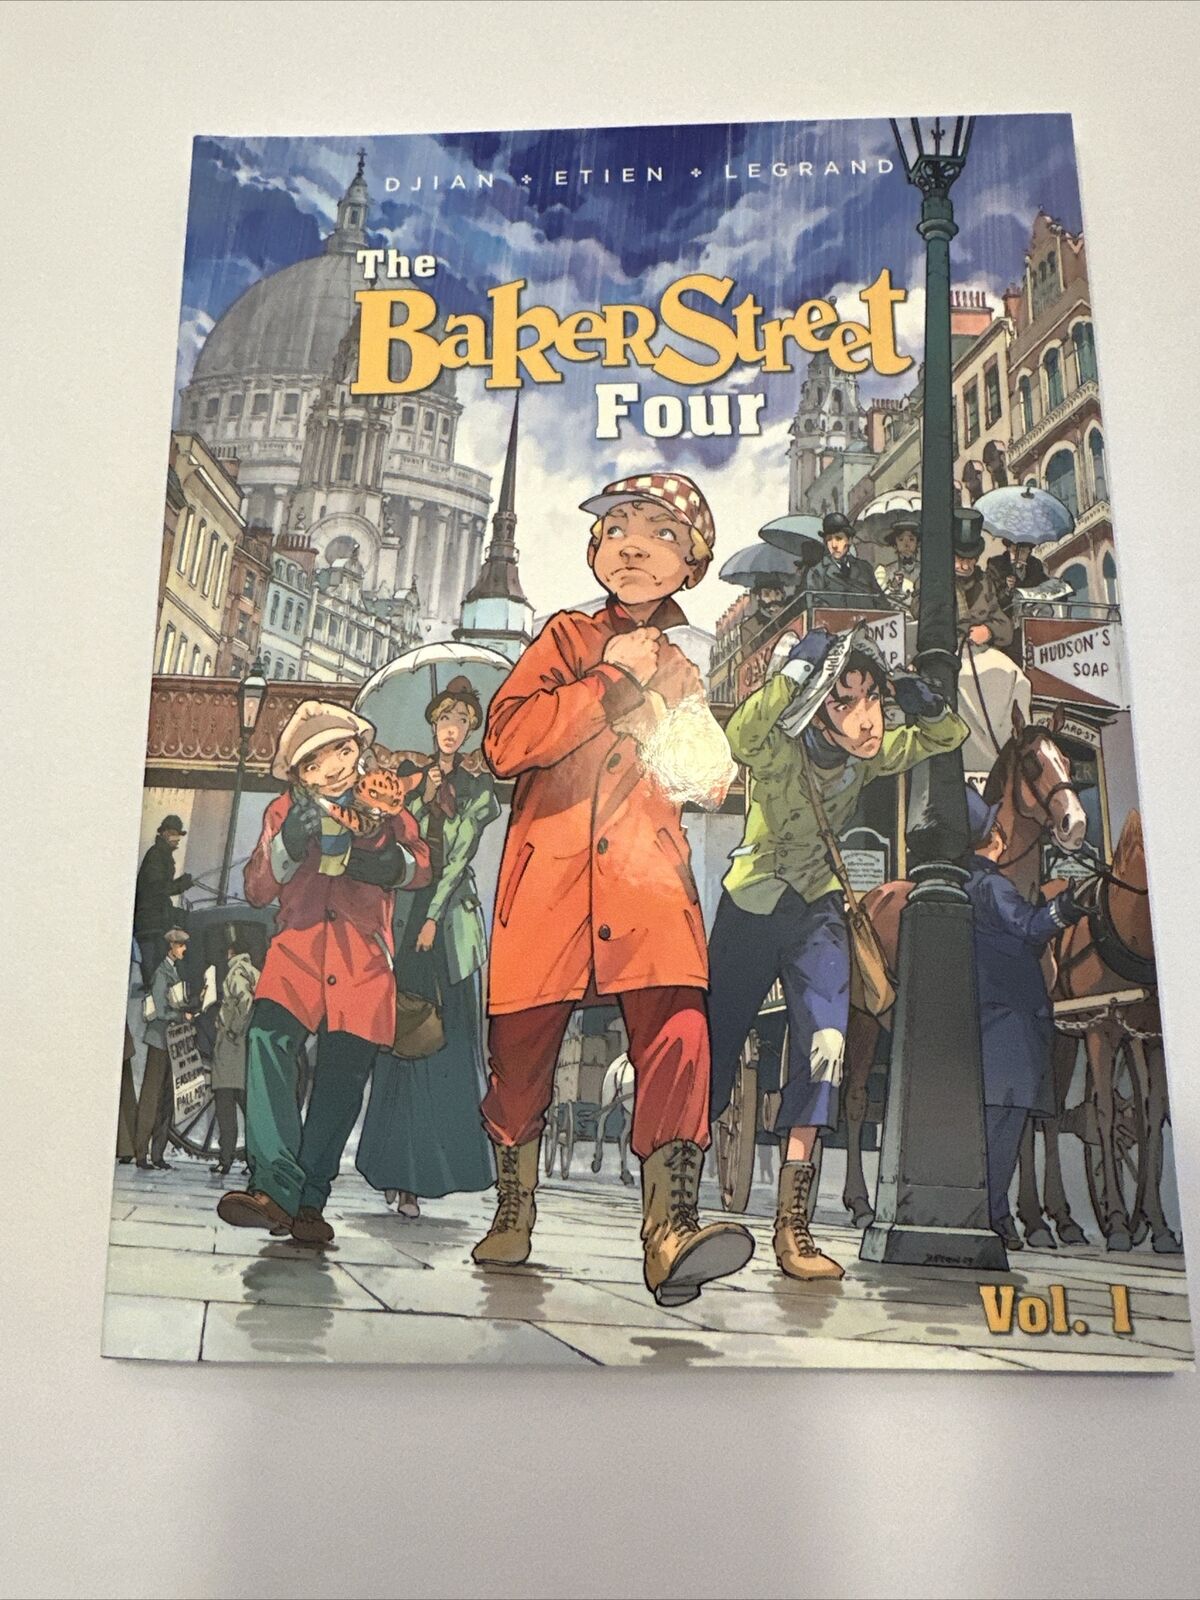 The Baker Street Four Vol 1 Legrand Olivier; Djian J. B. graphic novel paperback